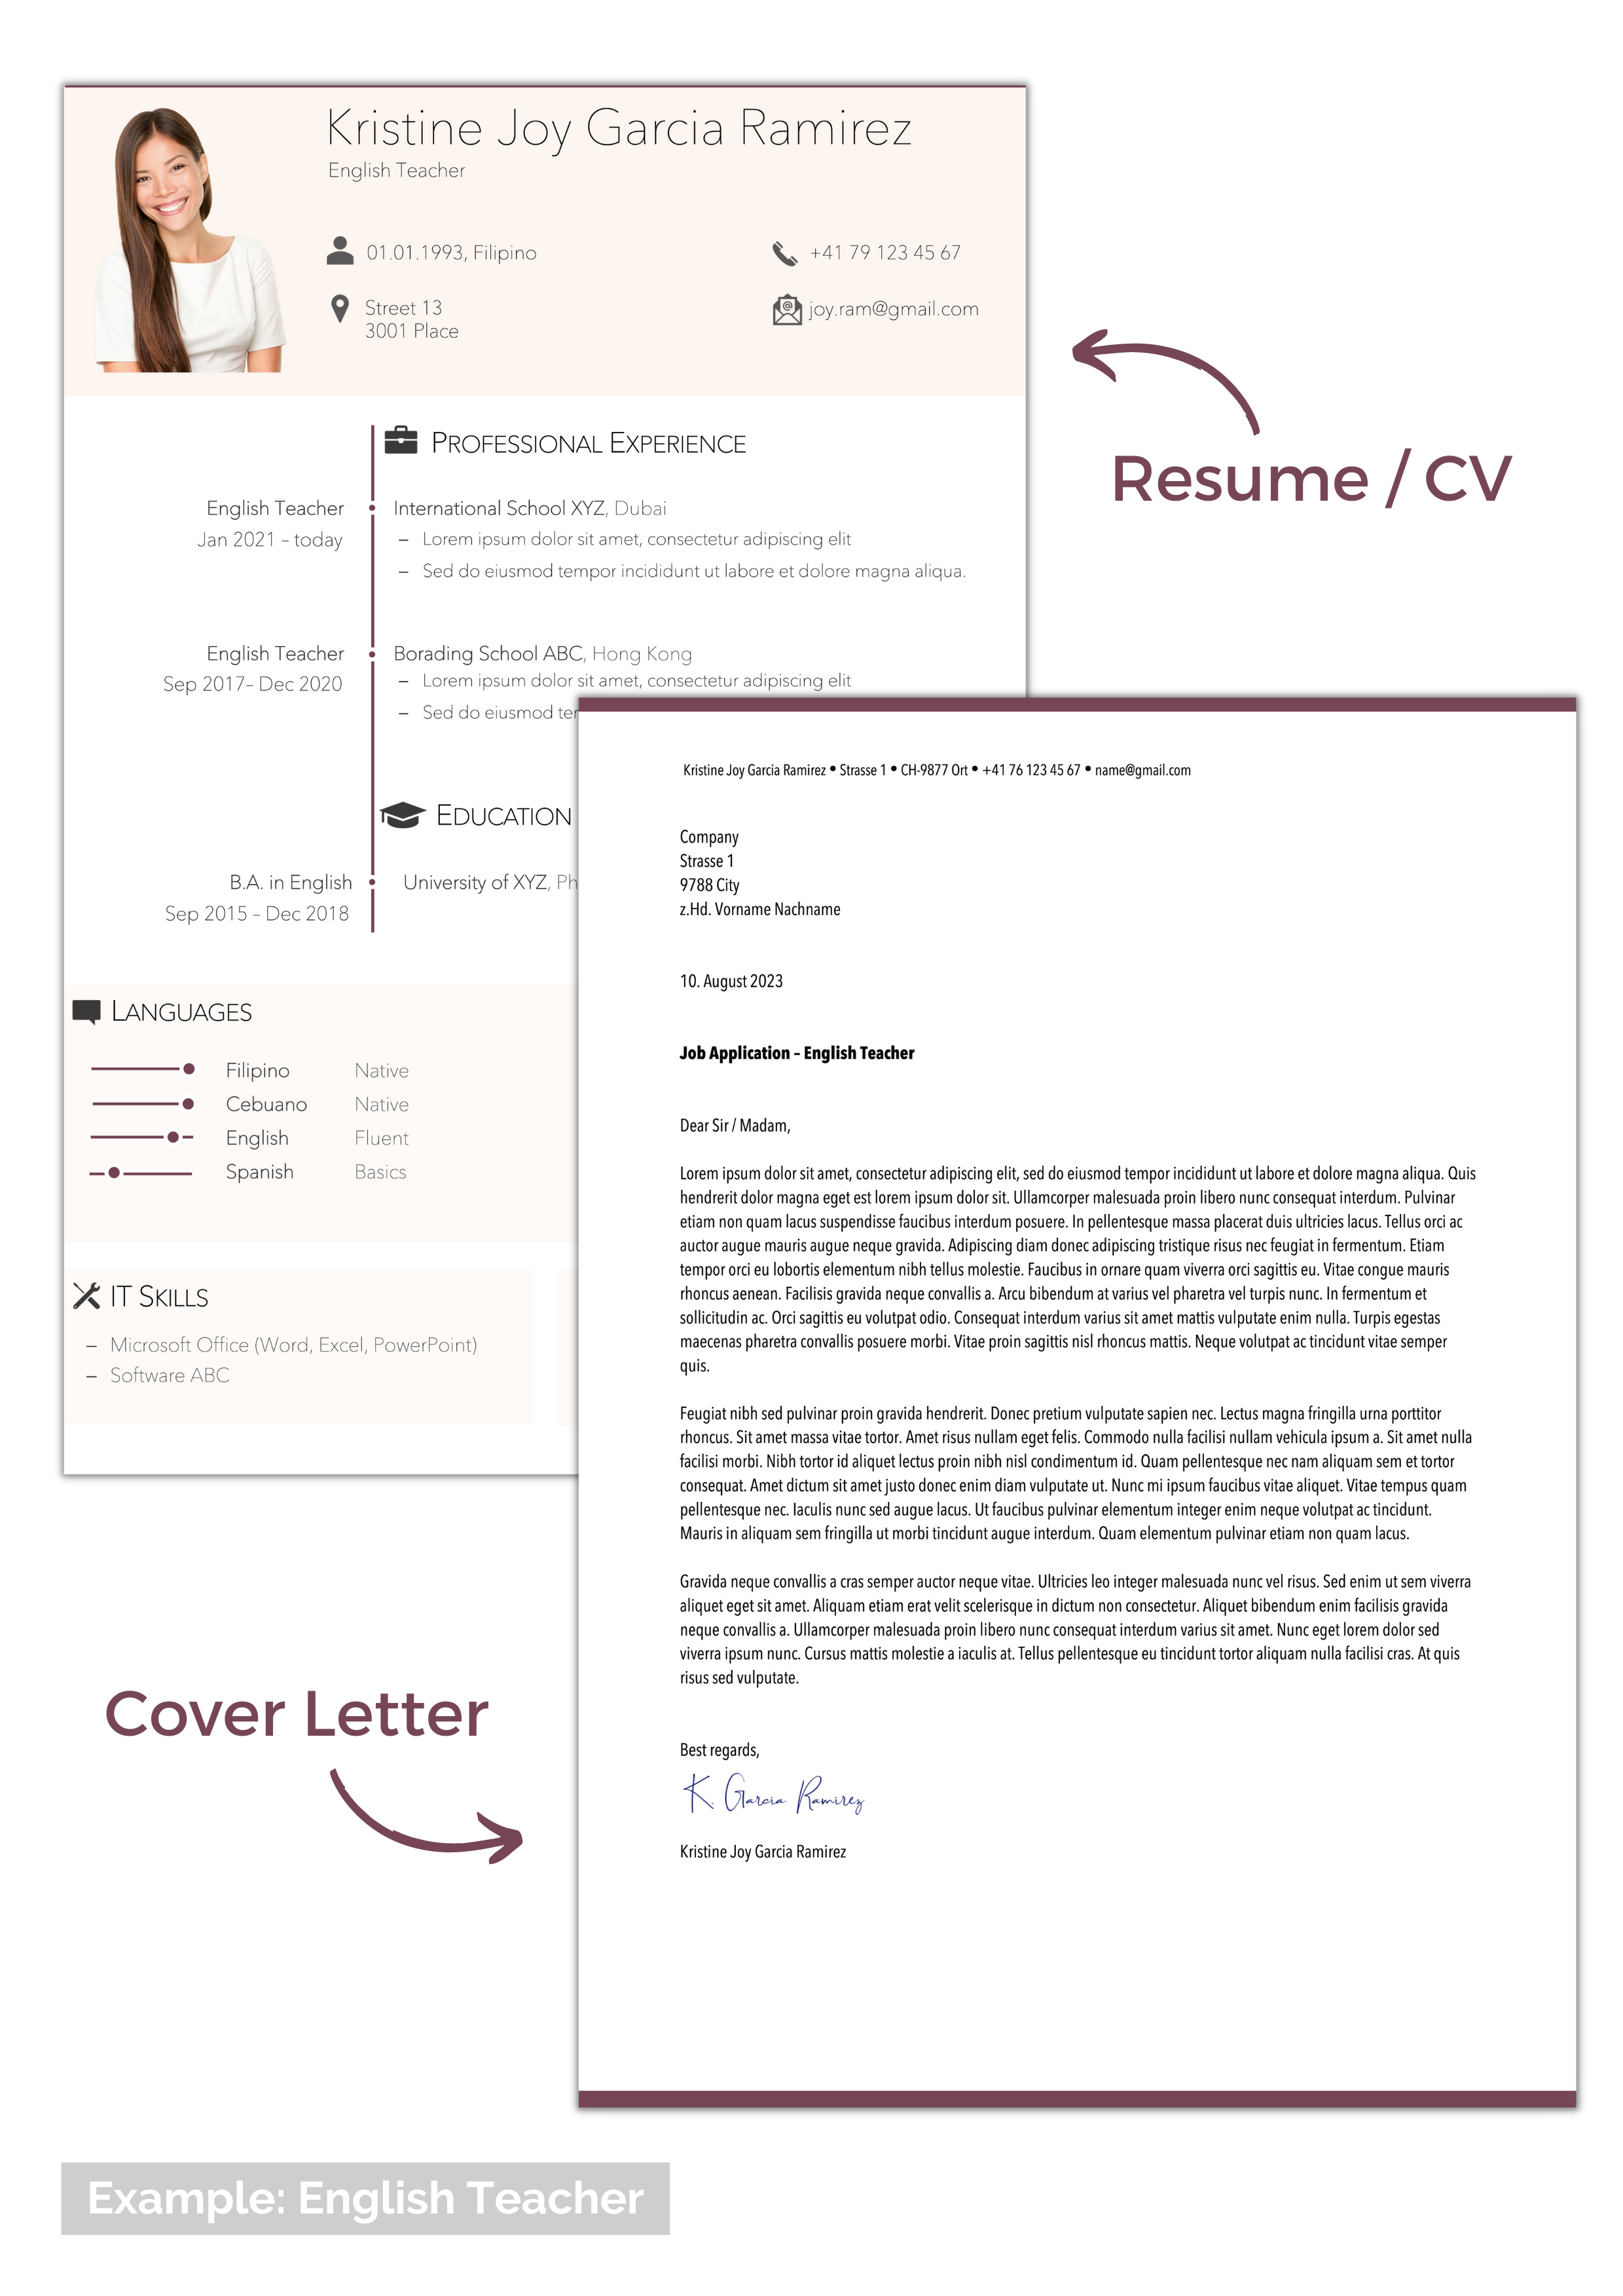 sample swiss job application resume and cover letter for english teacher